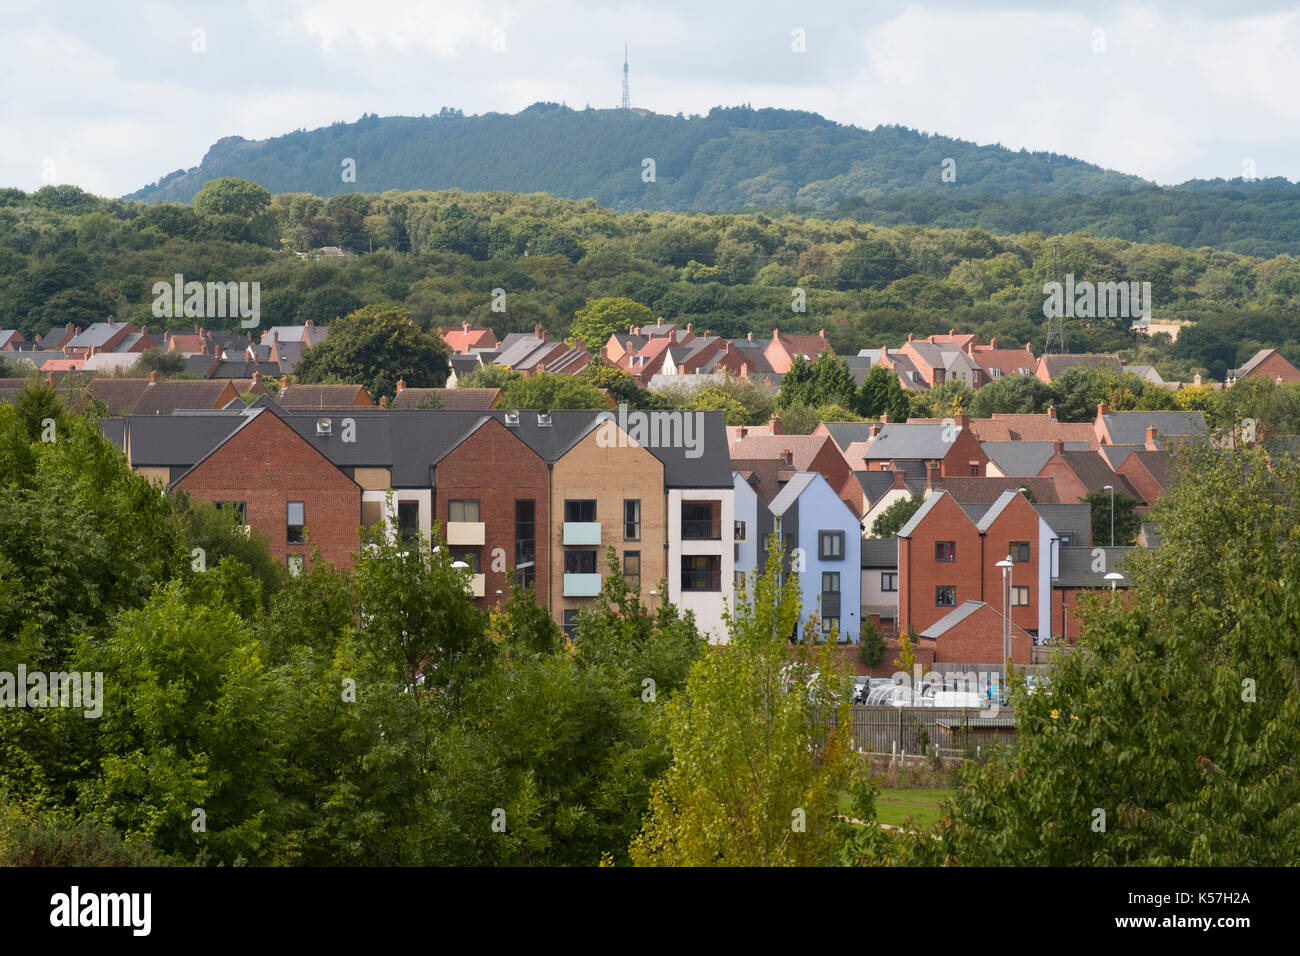 Housing development underneath the Wrekin hill at Lawley Village, Telford, Shropshire, UK Stock Photo